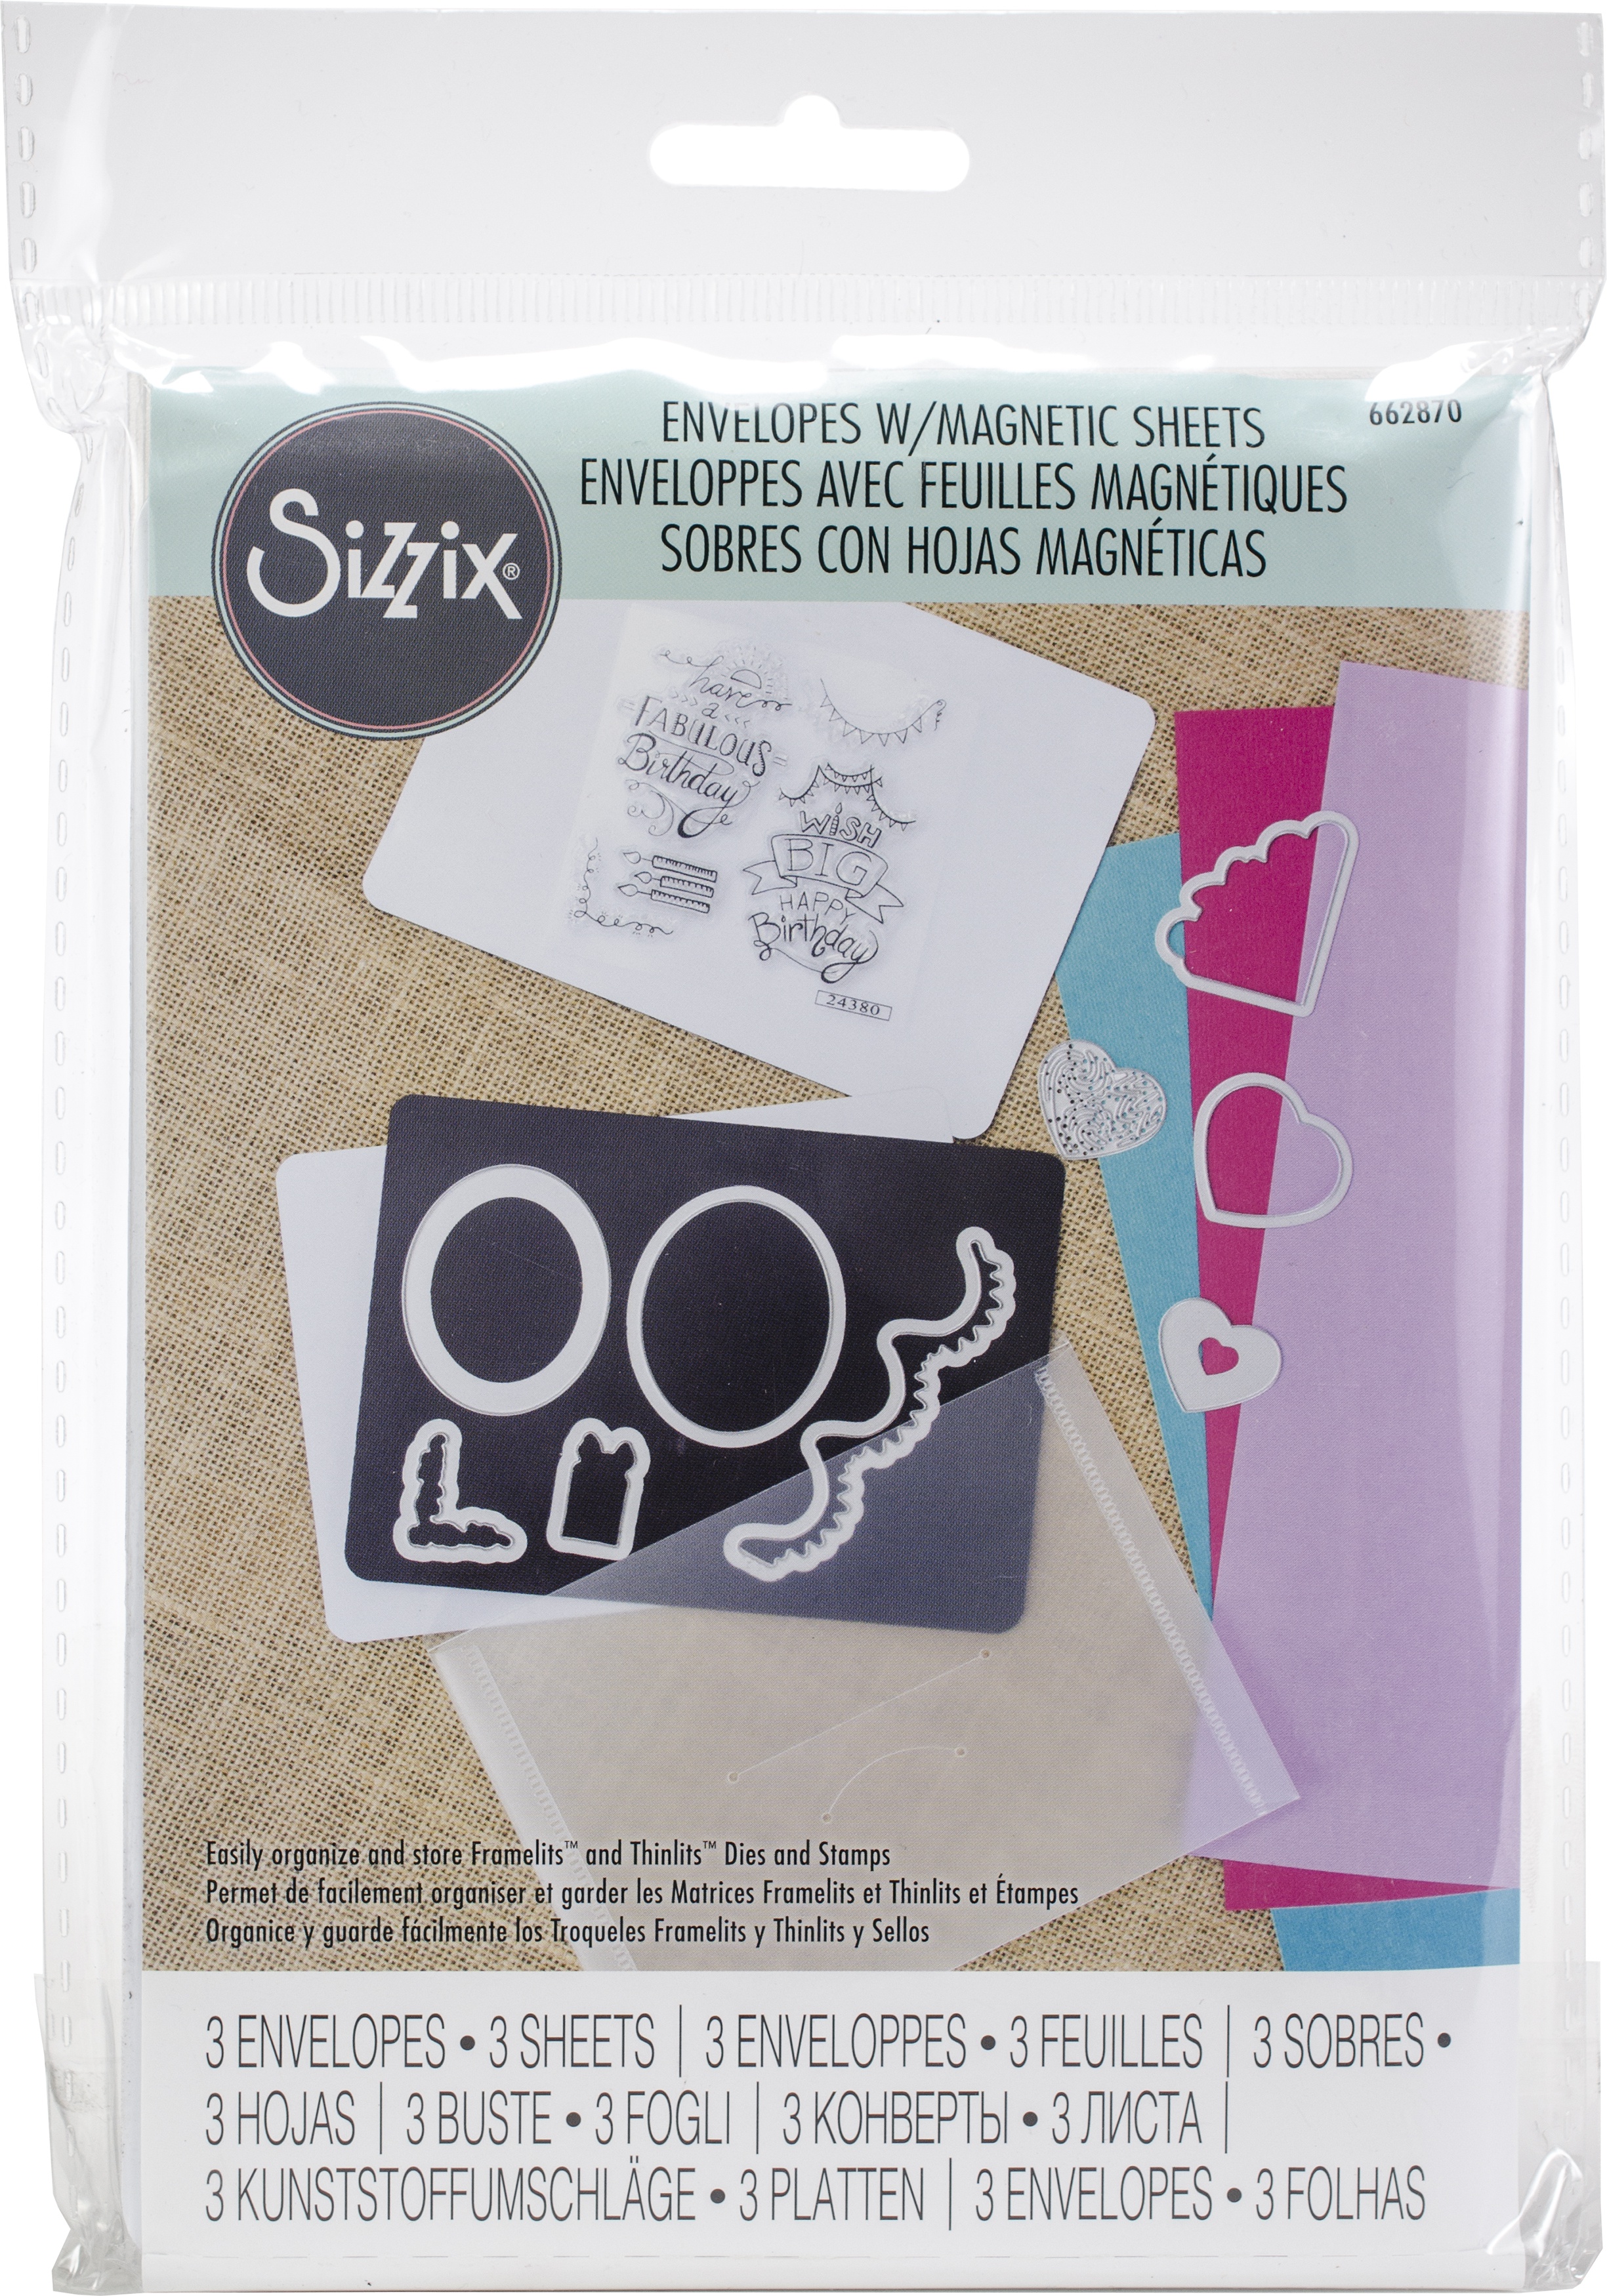 Sizzix Plastic Envelopes W/Magnetic Sheets 5